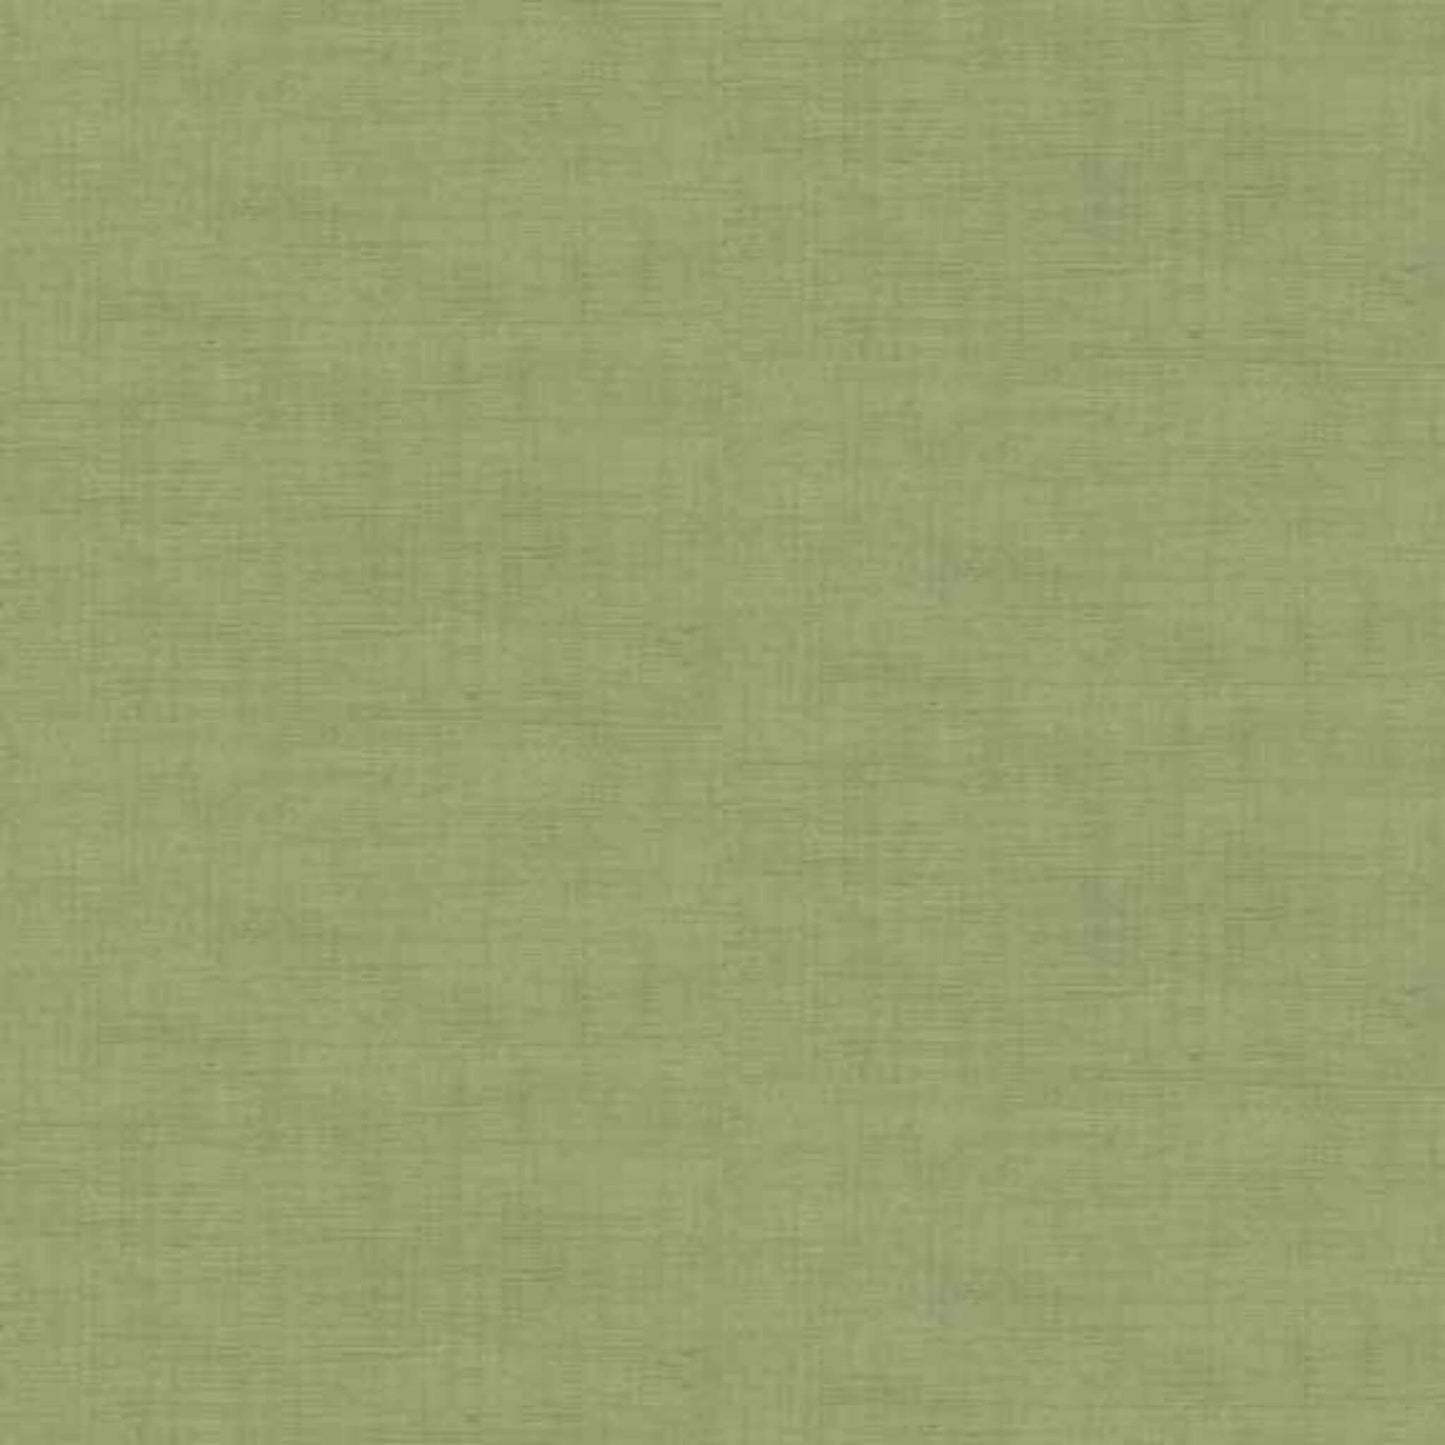 Sage Green (1473/G4) - Linen Texture range of fabric by Makower